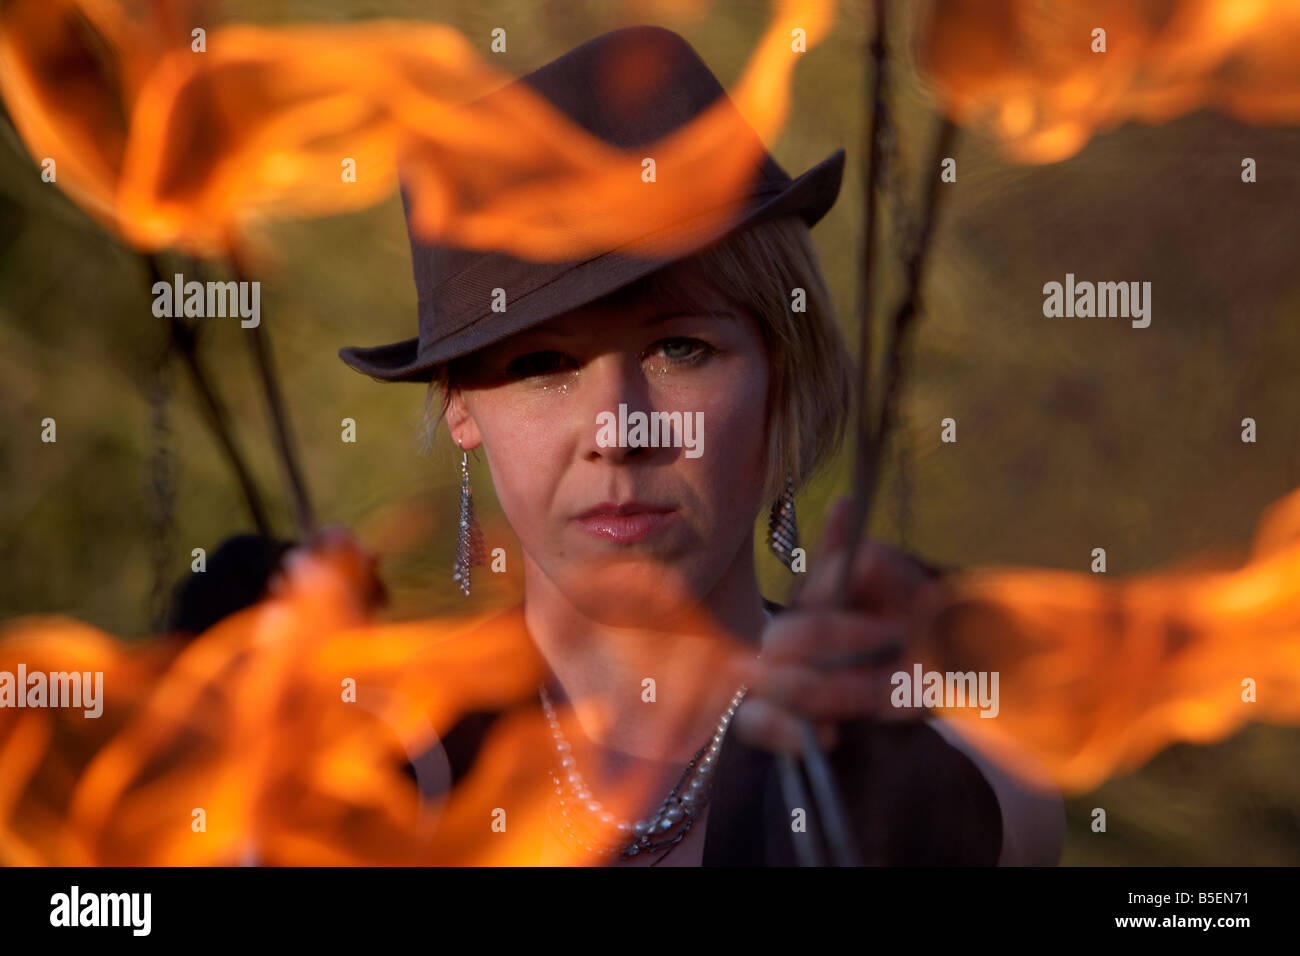 firepoise female fire dance performance artist wearing hat holding fire fans Stock Photo